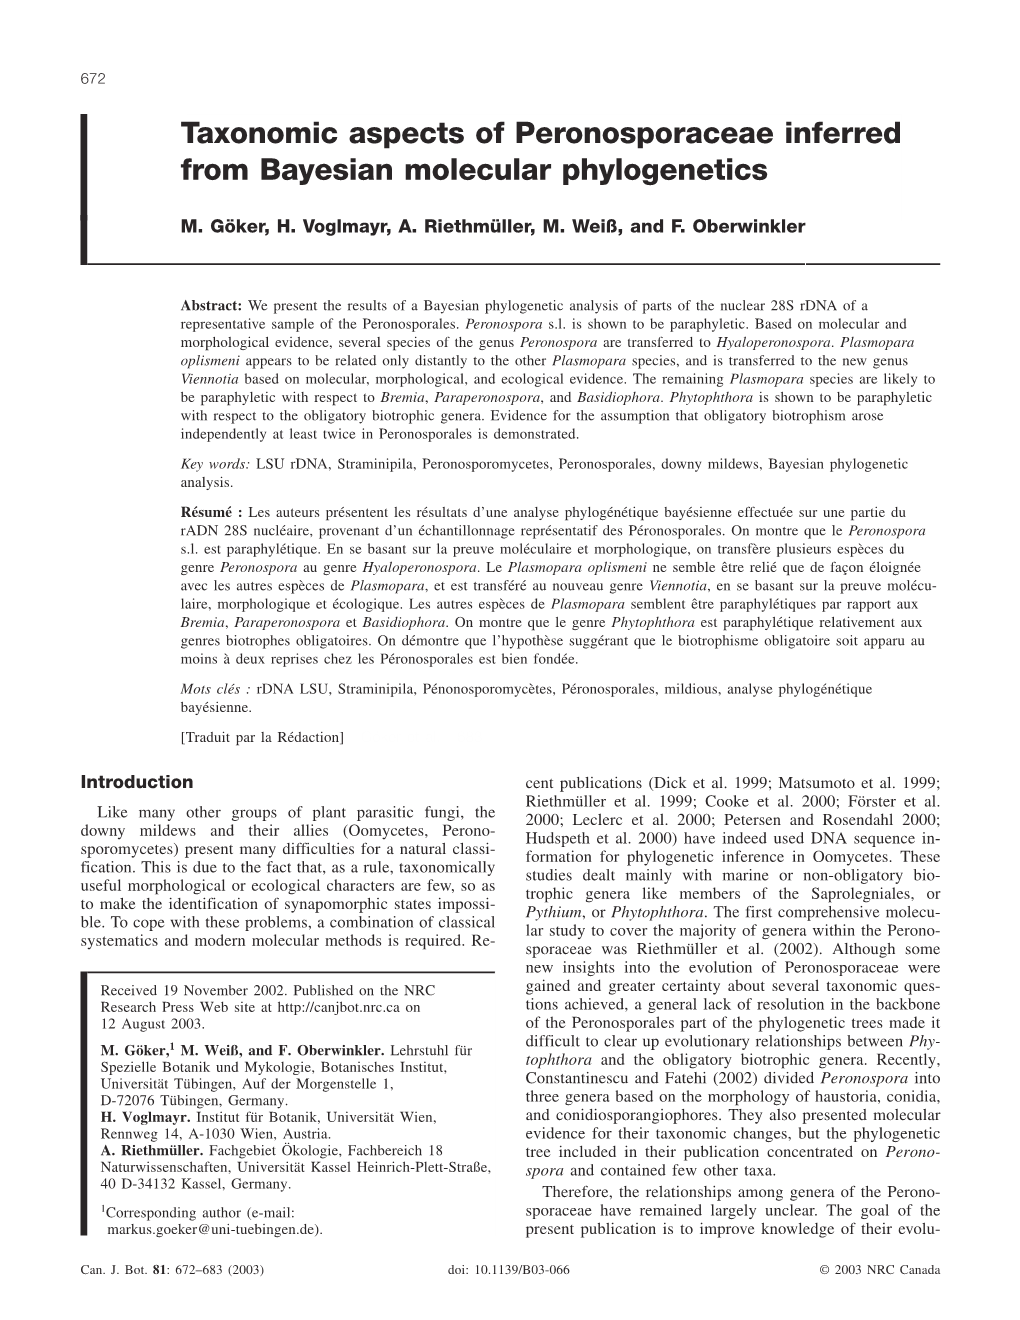 Taxonomic Aspects of Peronosporaceae Inferred from Bayesian Molecular Phylogenetics